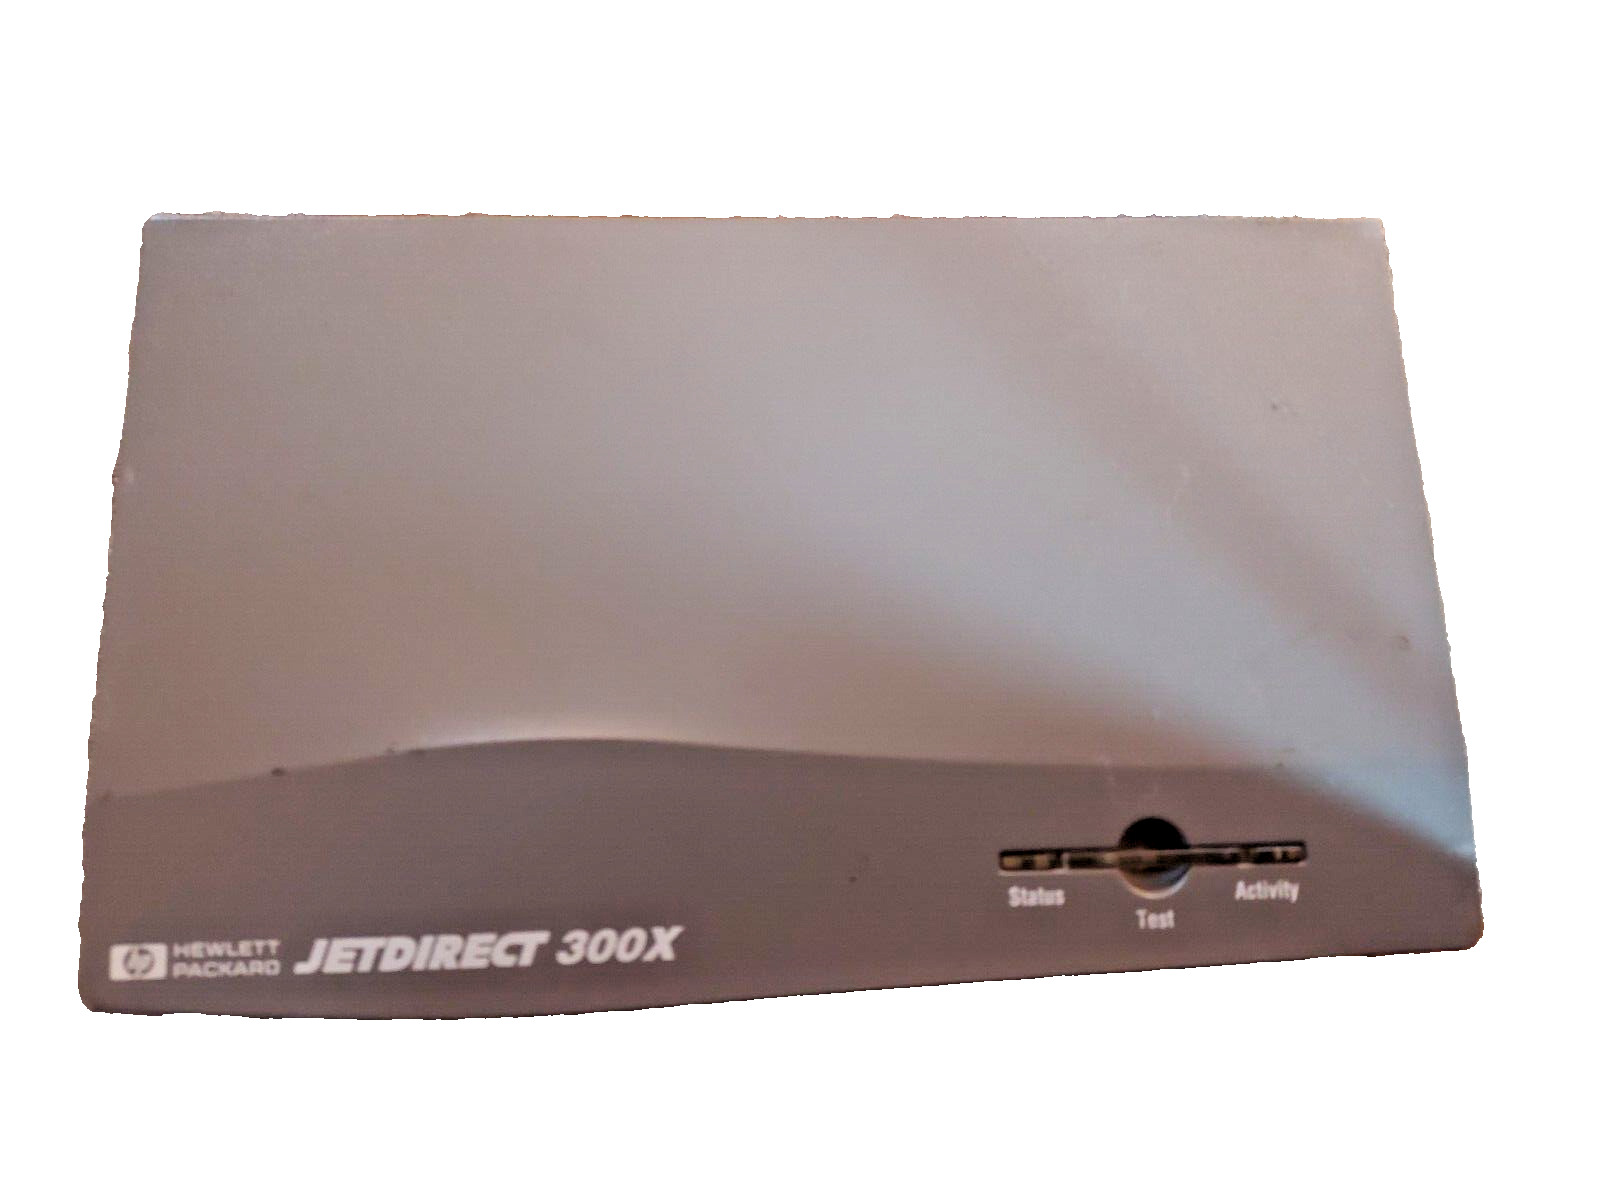 HP JetDirect 610N J4169a J4169-60023 10/100TX Printer Server Network Card RJ45